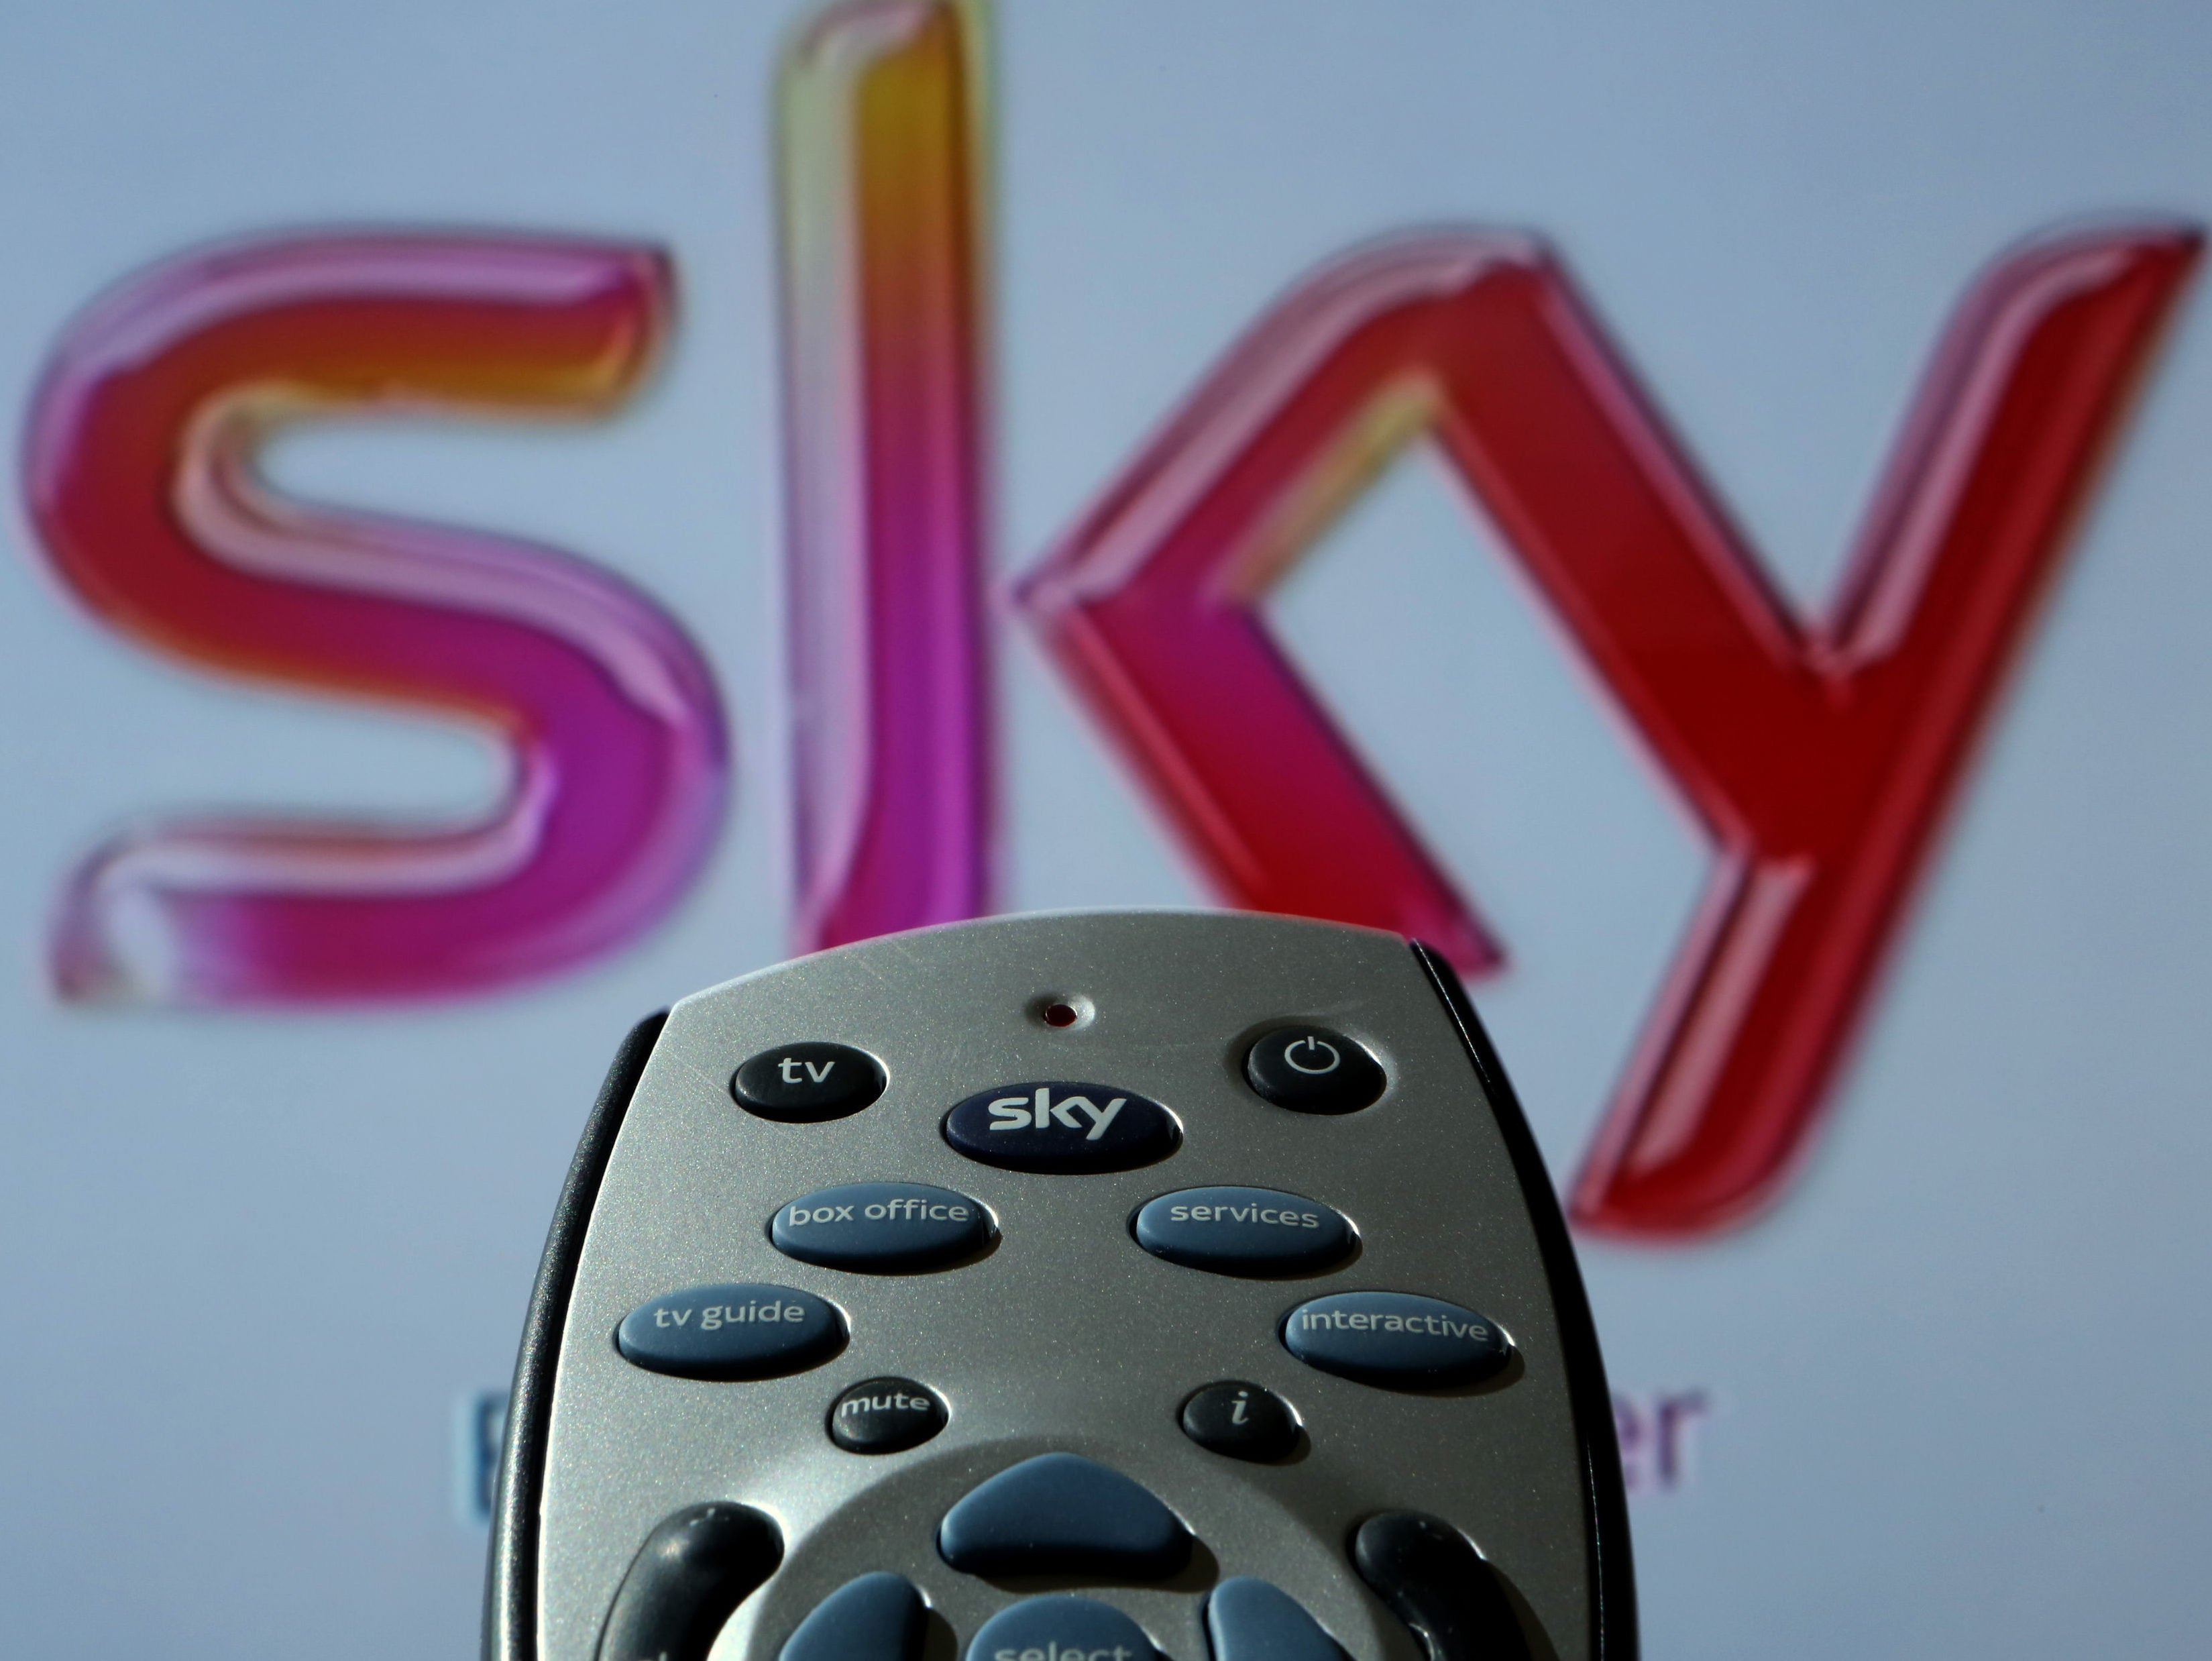 Rupert Murdoch's £11bn Sky takeover bid green lit by European Commission, but Ofcom still reviewing